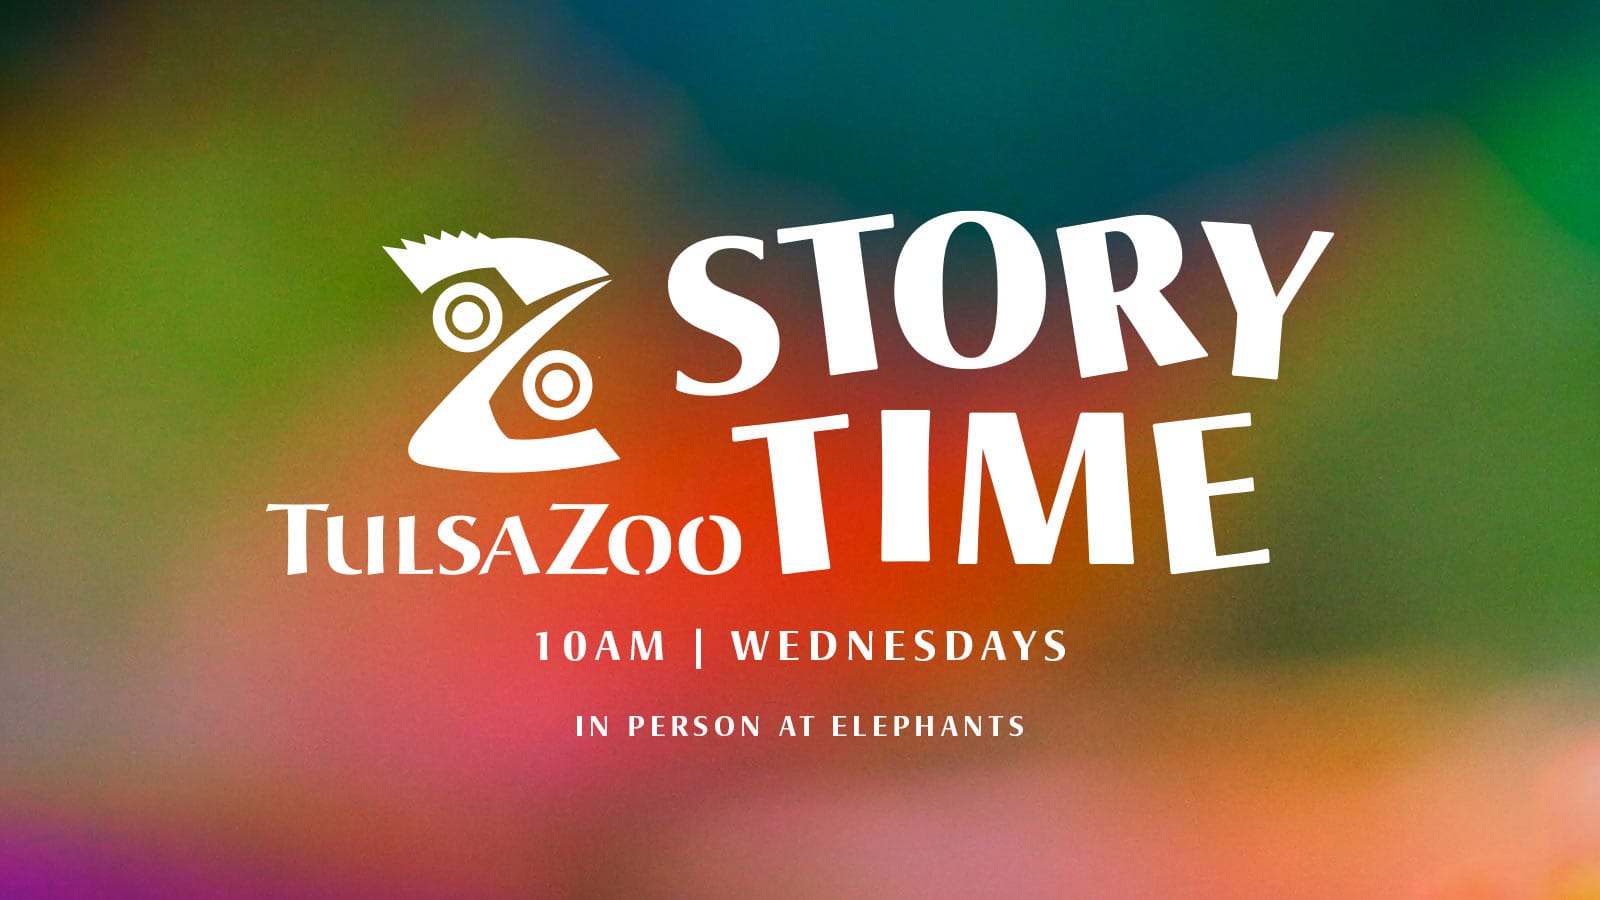 Events Tulsa Zoo